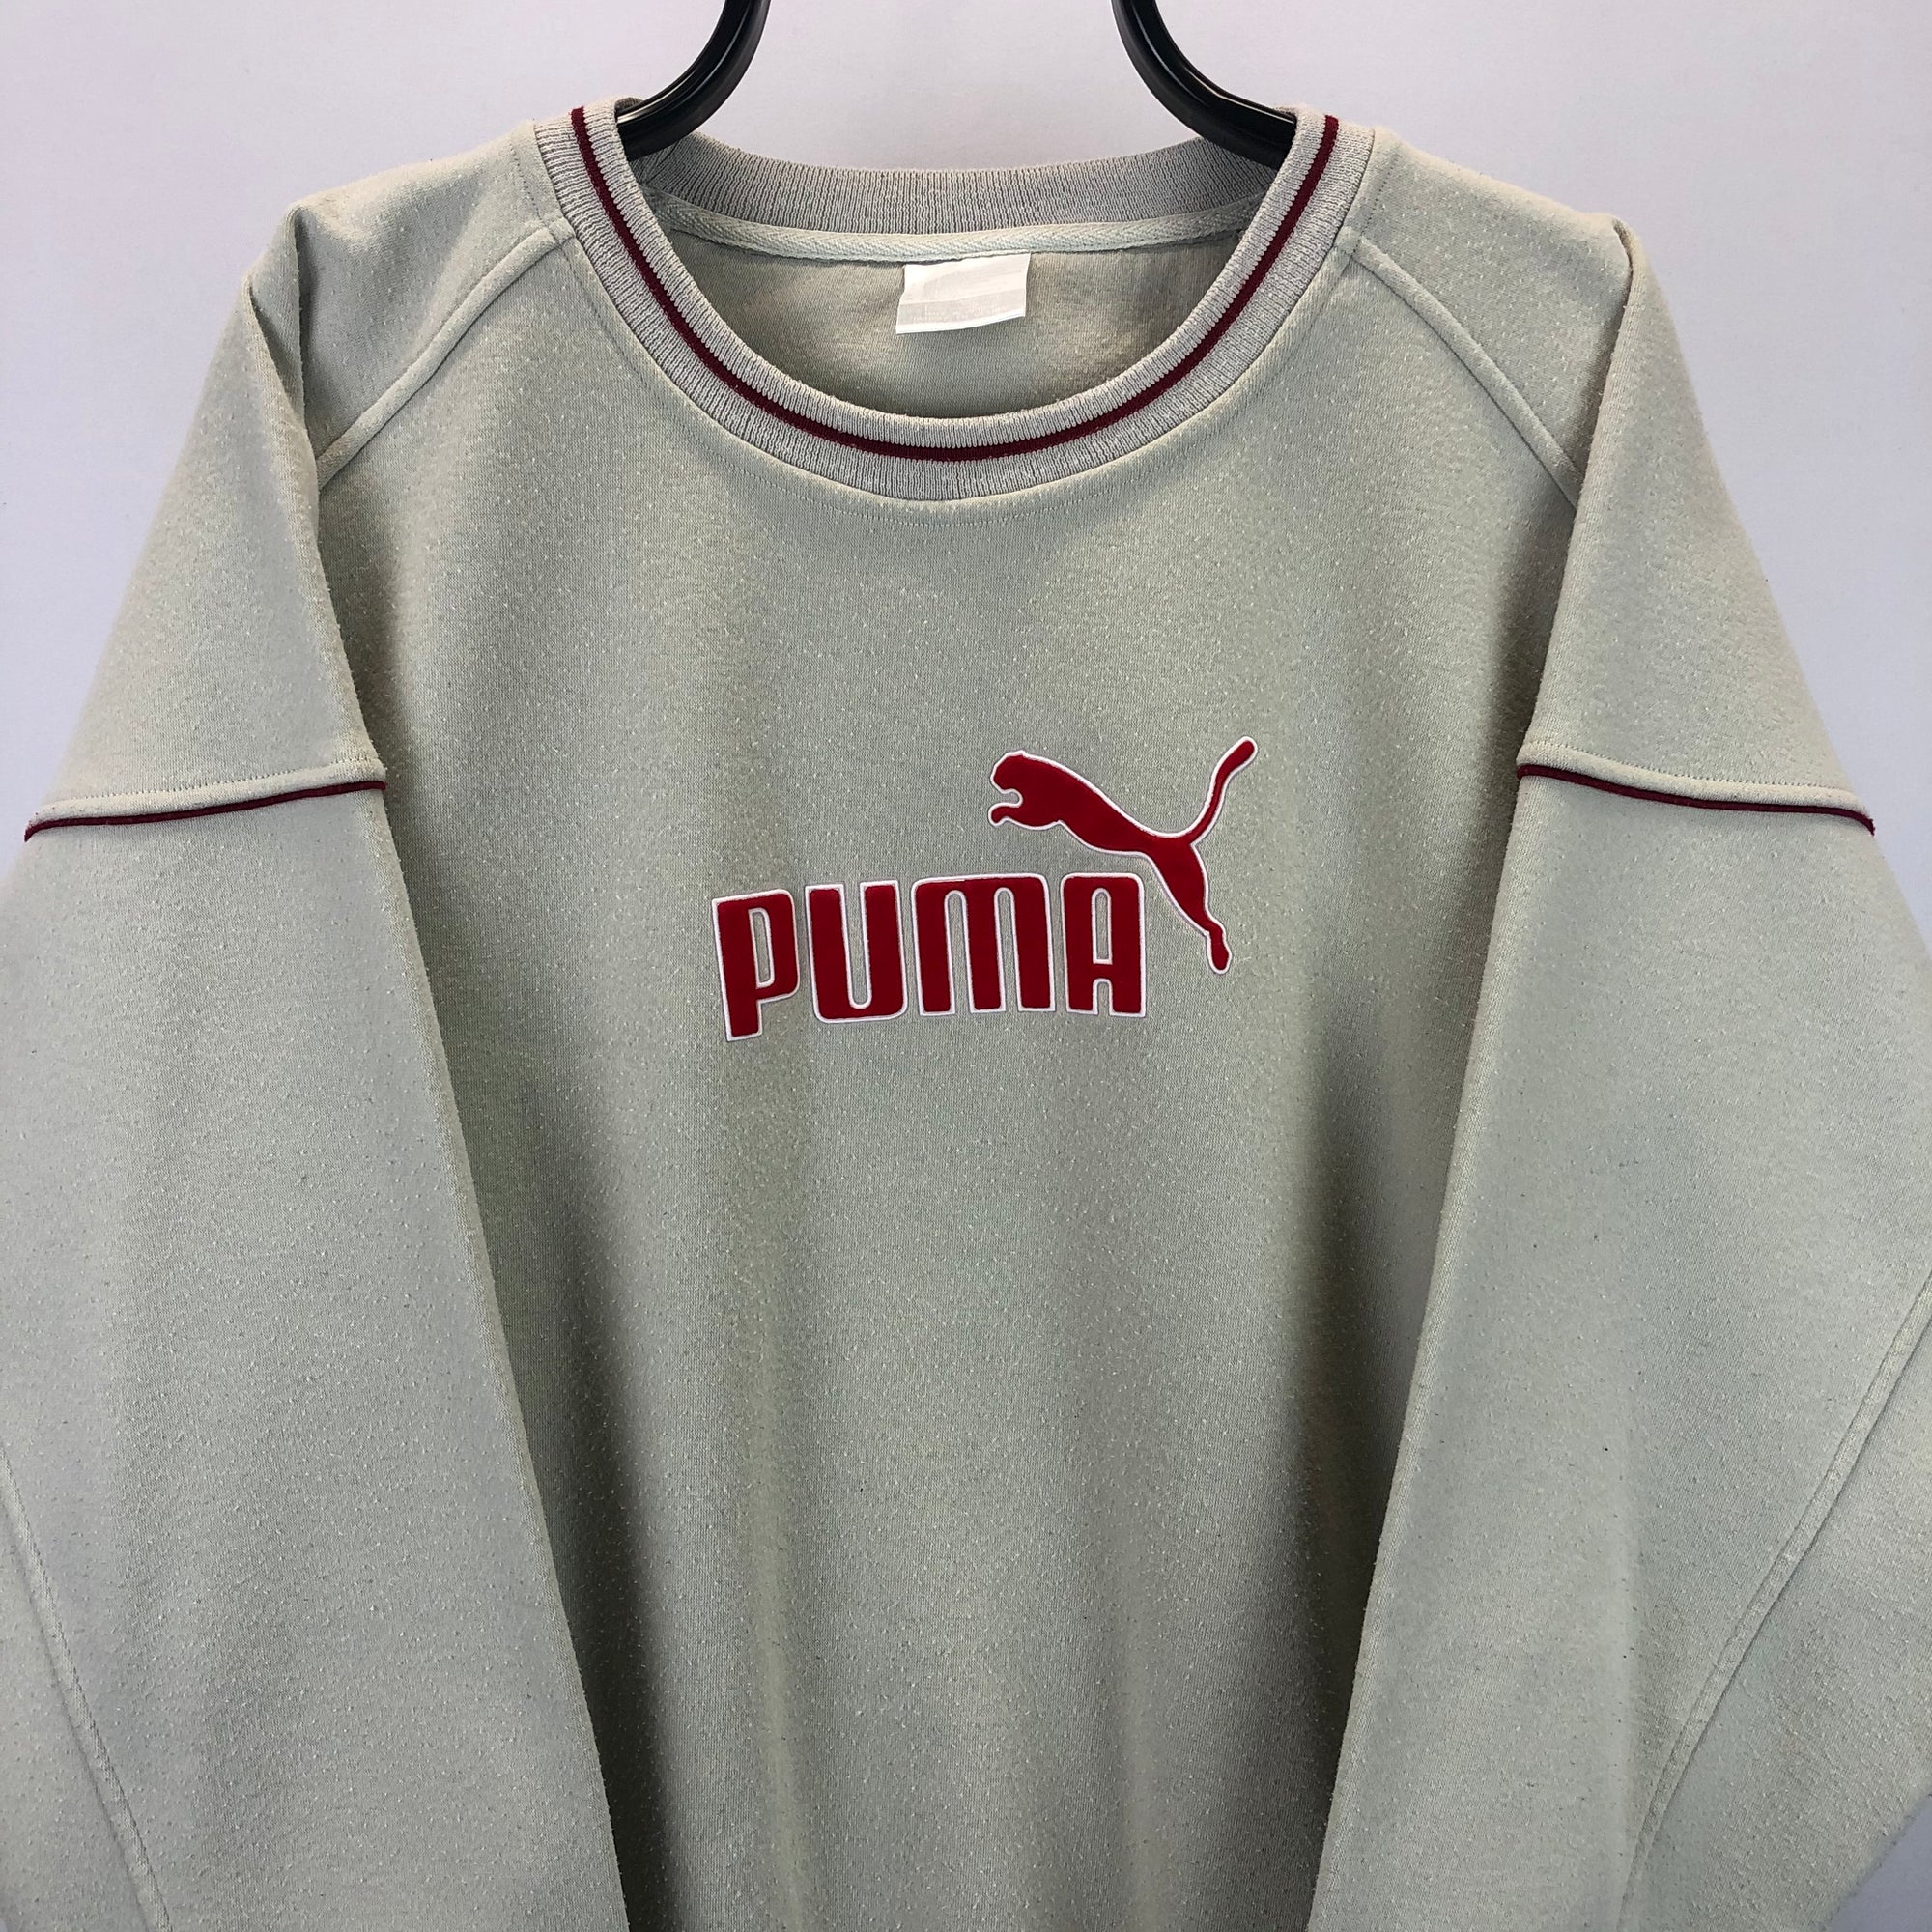 Vintage Puma Spellout Sweatshirt in Beige - Men’s Large/Women's XL